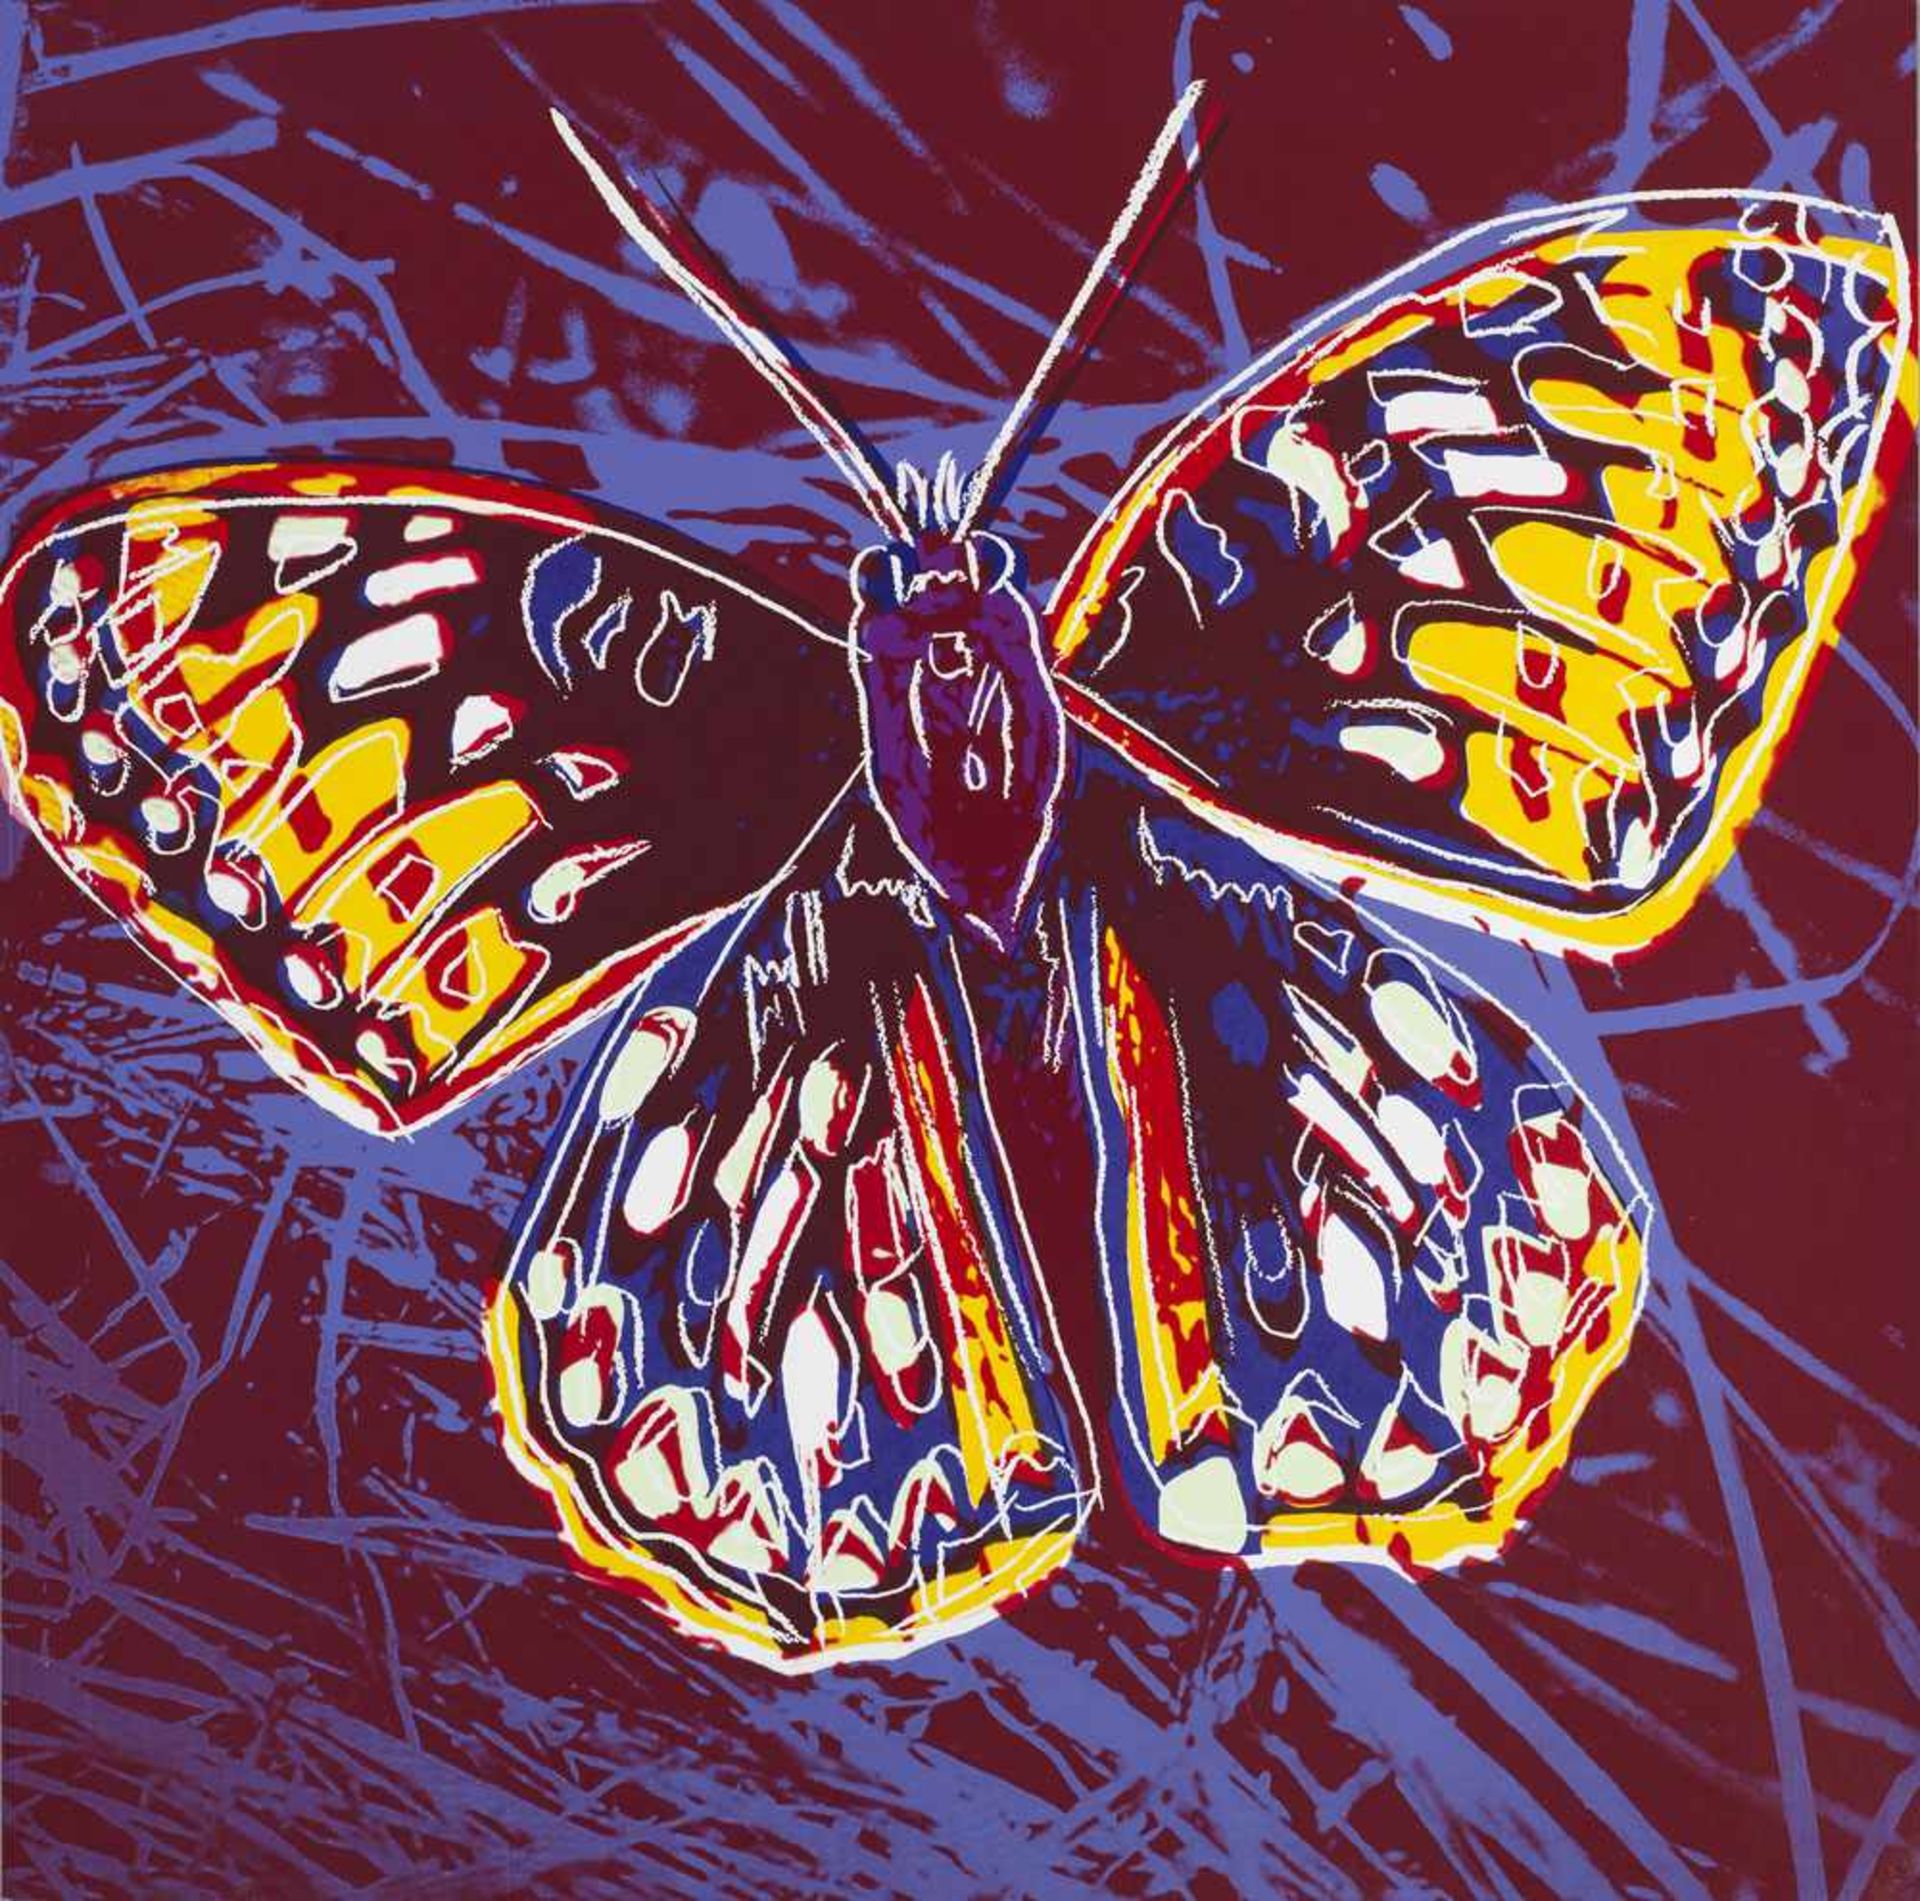 Andy Warhol(1928 Pittsburgh - 1987 New York)"Butterfly" (Schmetterling) aus dem Portfolio "